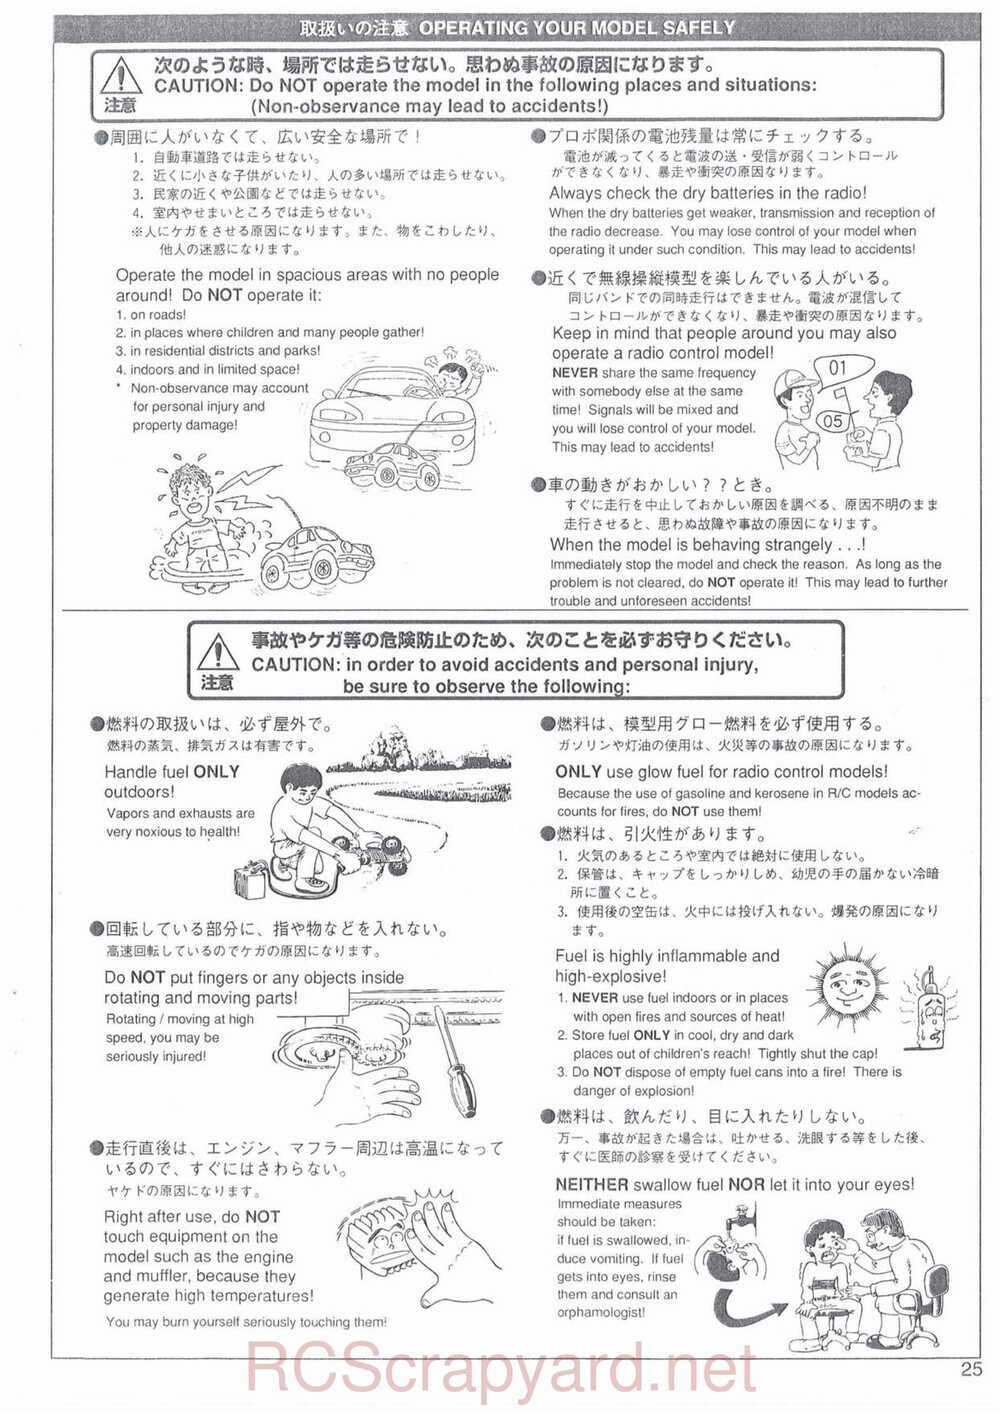 Kyosho - 31701 - Superten-Four FW-03 - Manual - Page 25